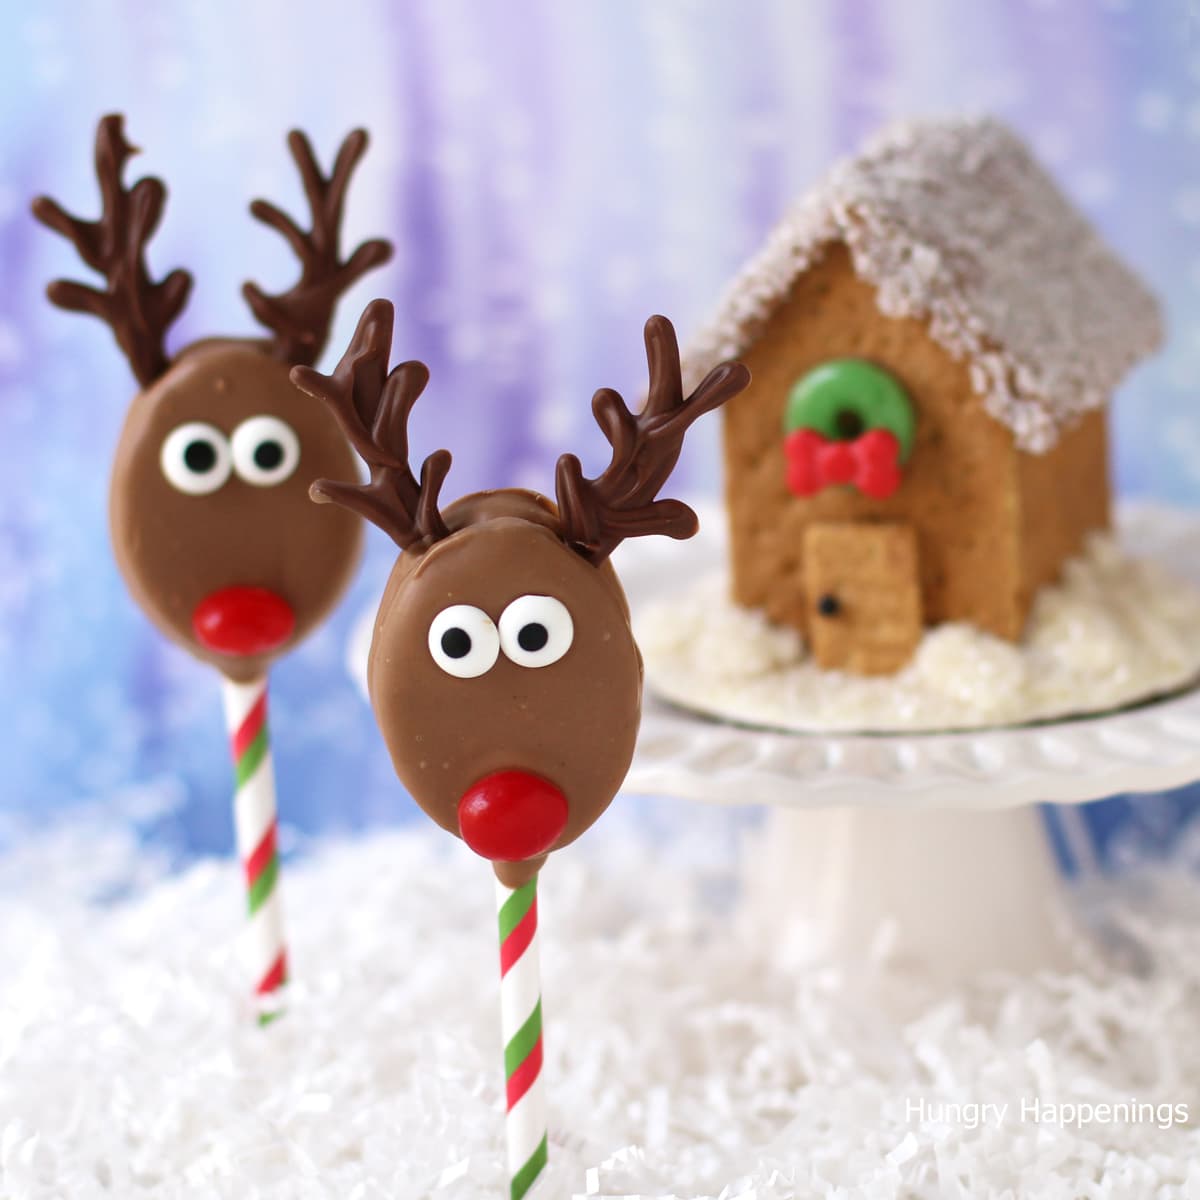 reindeer pops and graham cracker houses.